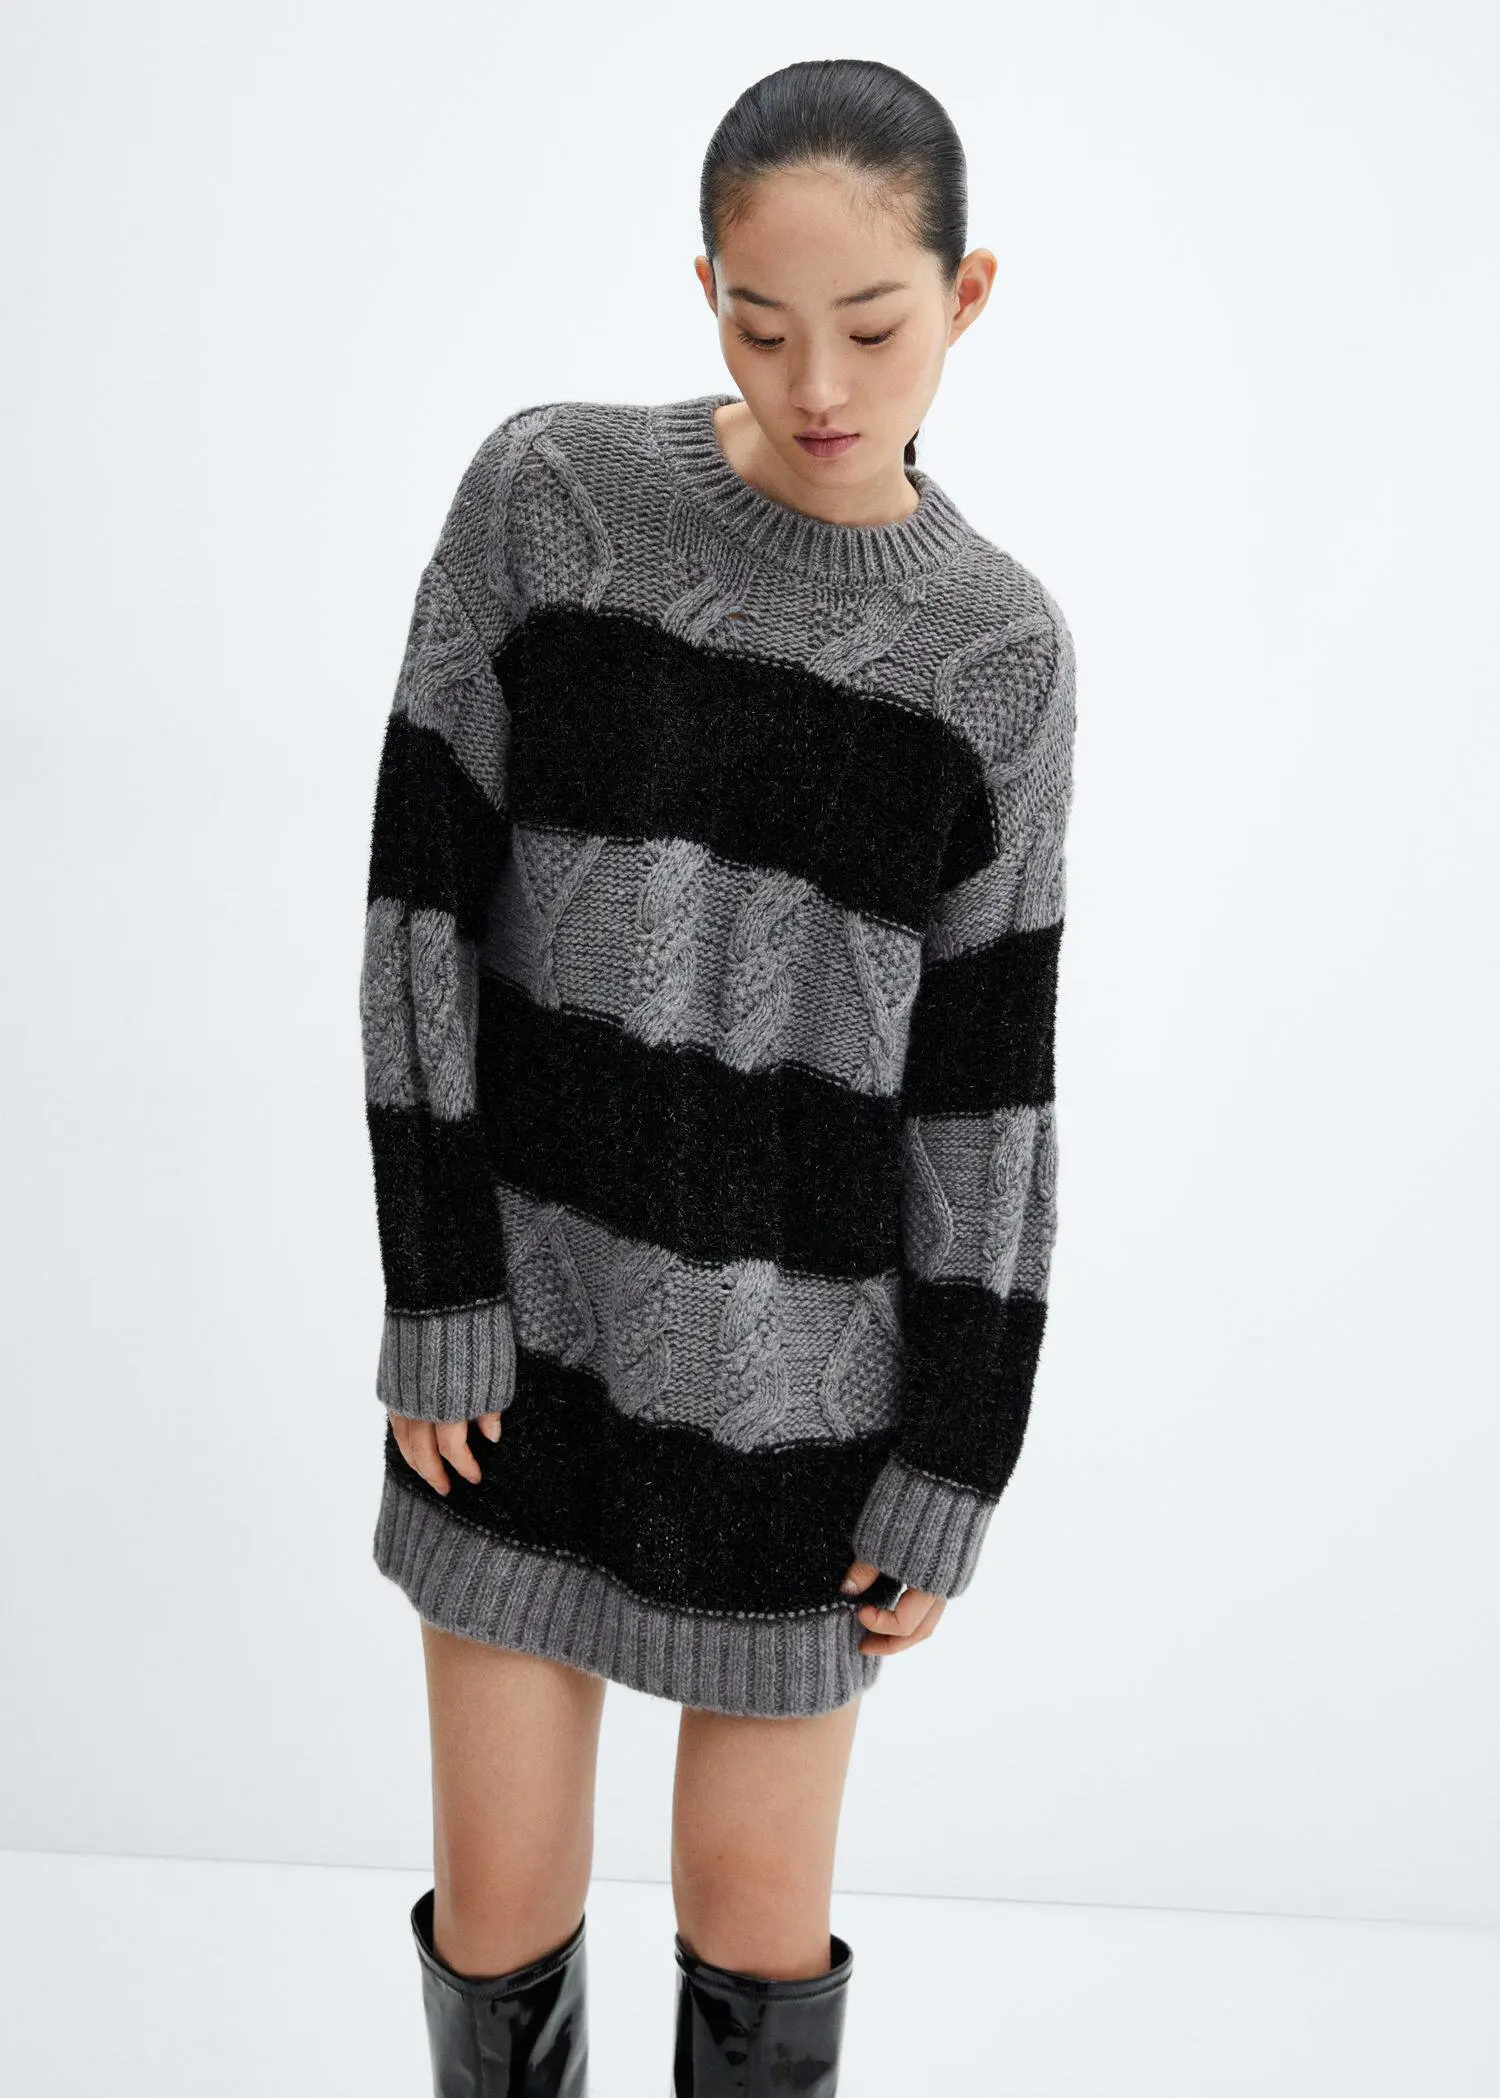 Mango Striped sweater dress. 2